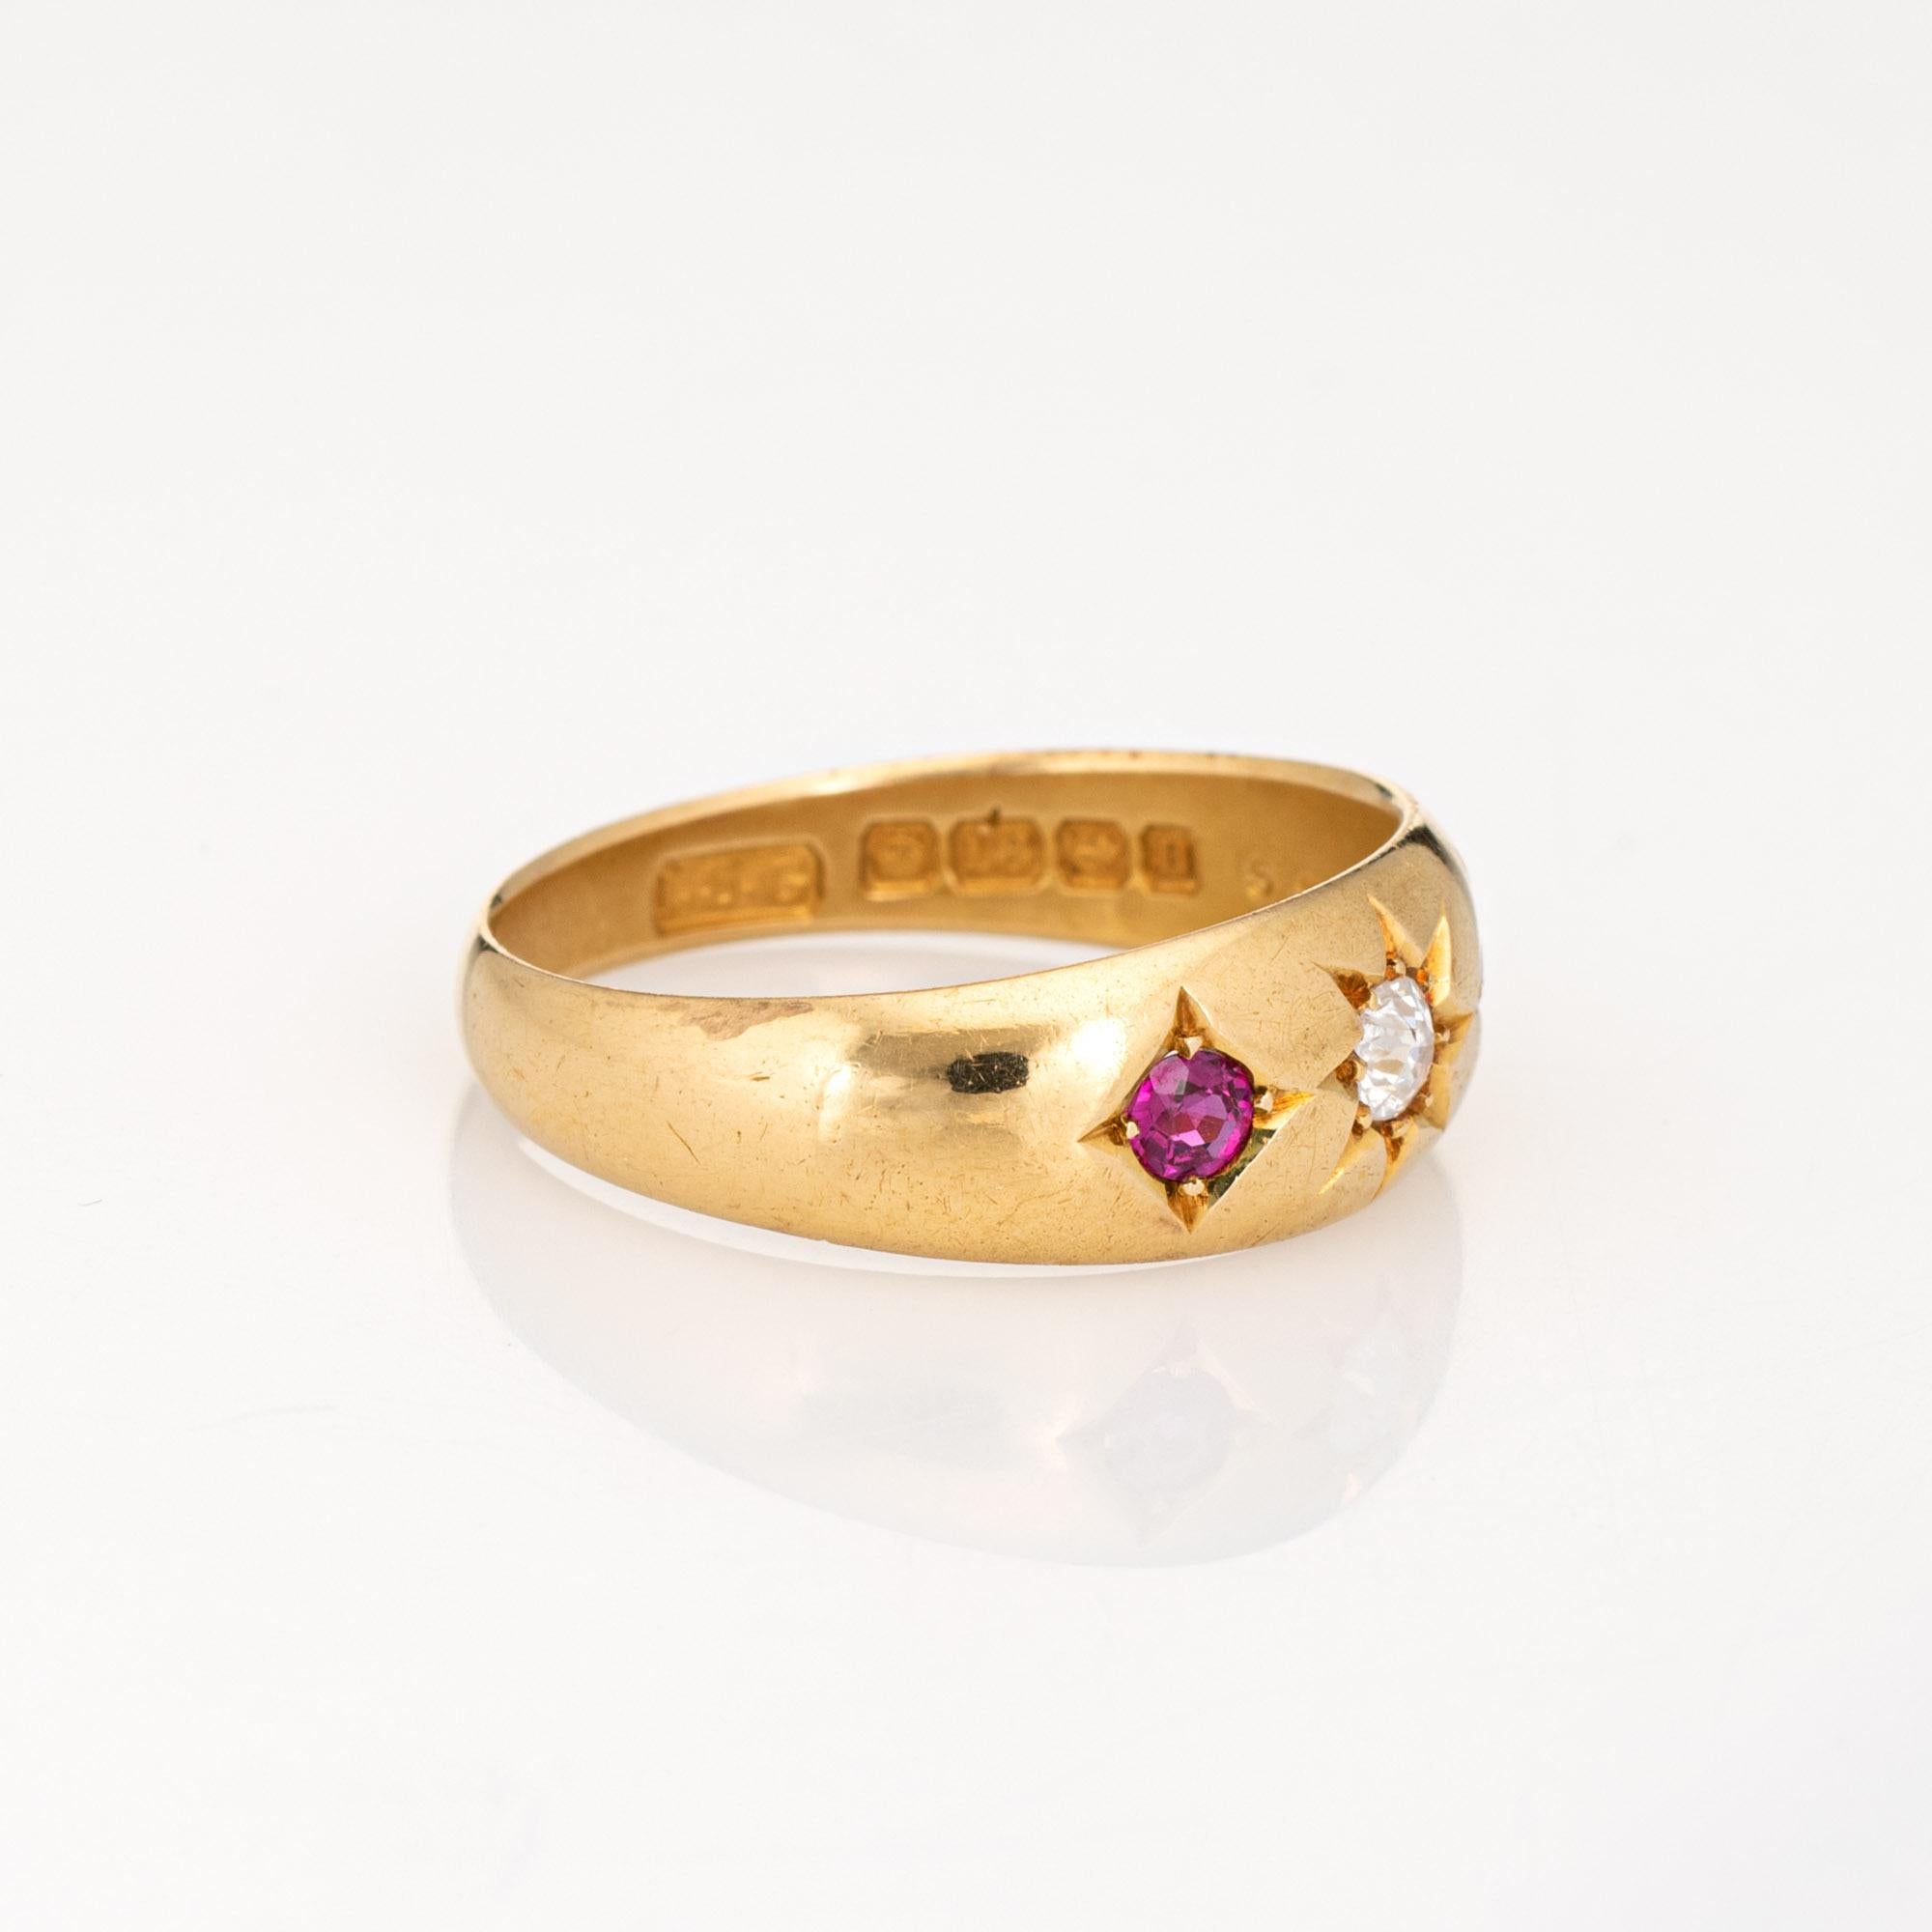 Old Mine Cut Antique Edwardian Ring c1912 Diamond Ruby Gypsy Band 18k Gold Jewelry